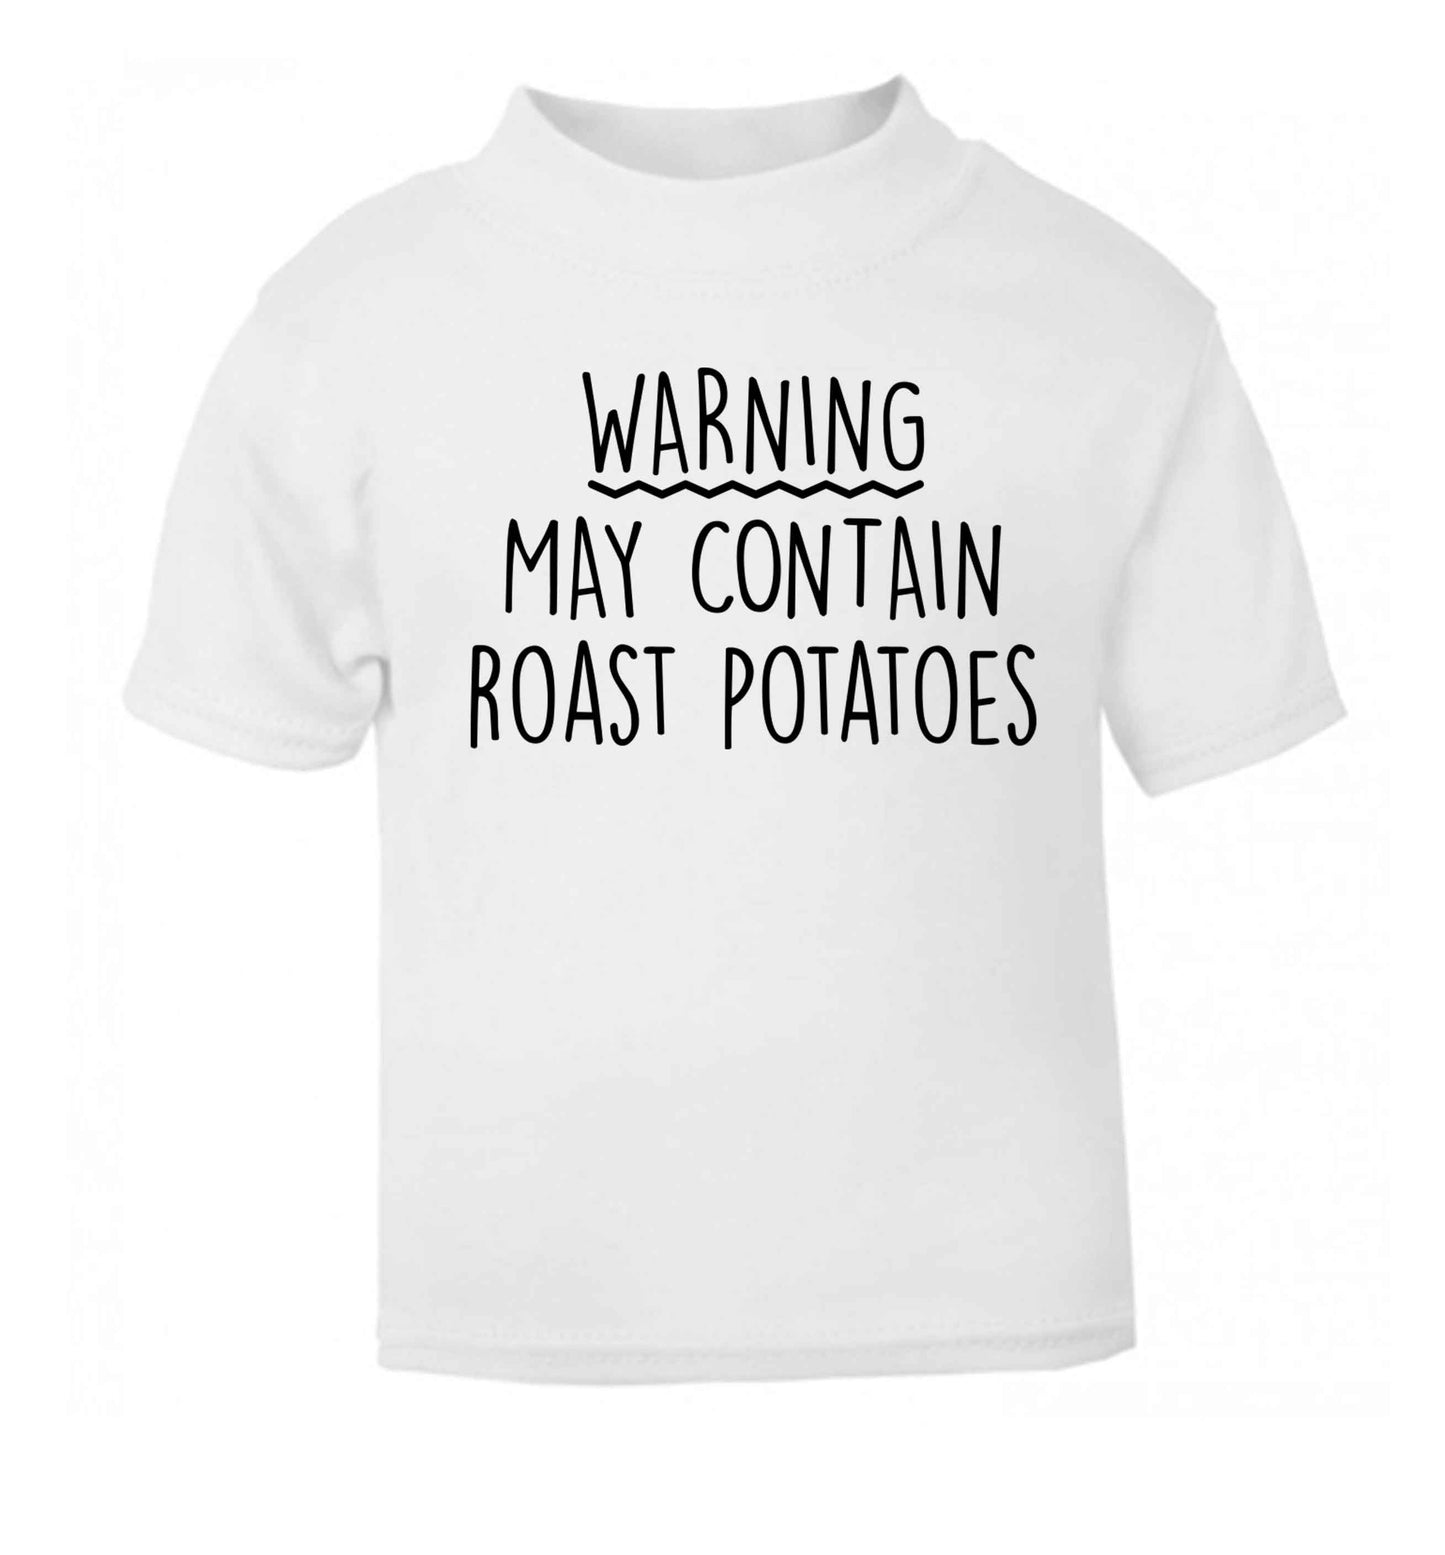 Warning may containg roast potatoes white baby toddler Tshirt 2 Years